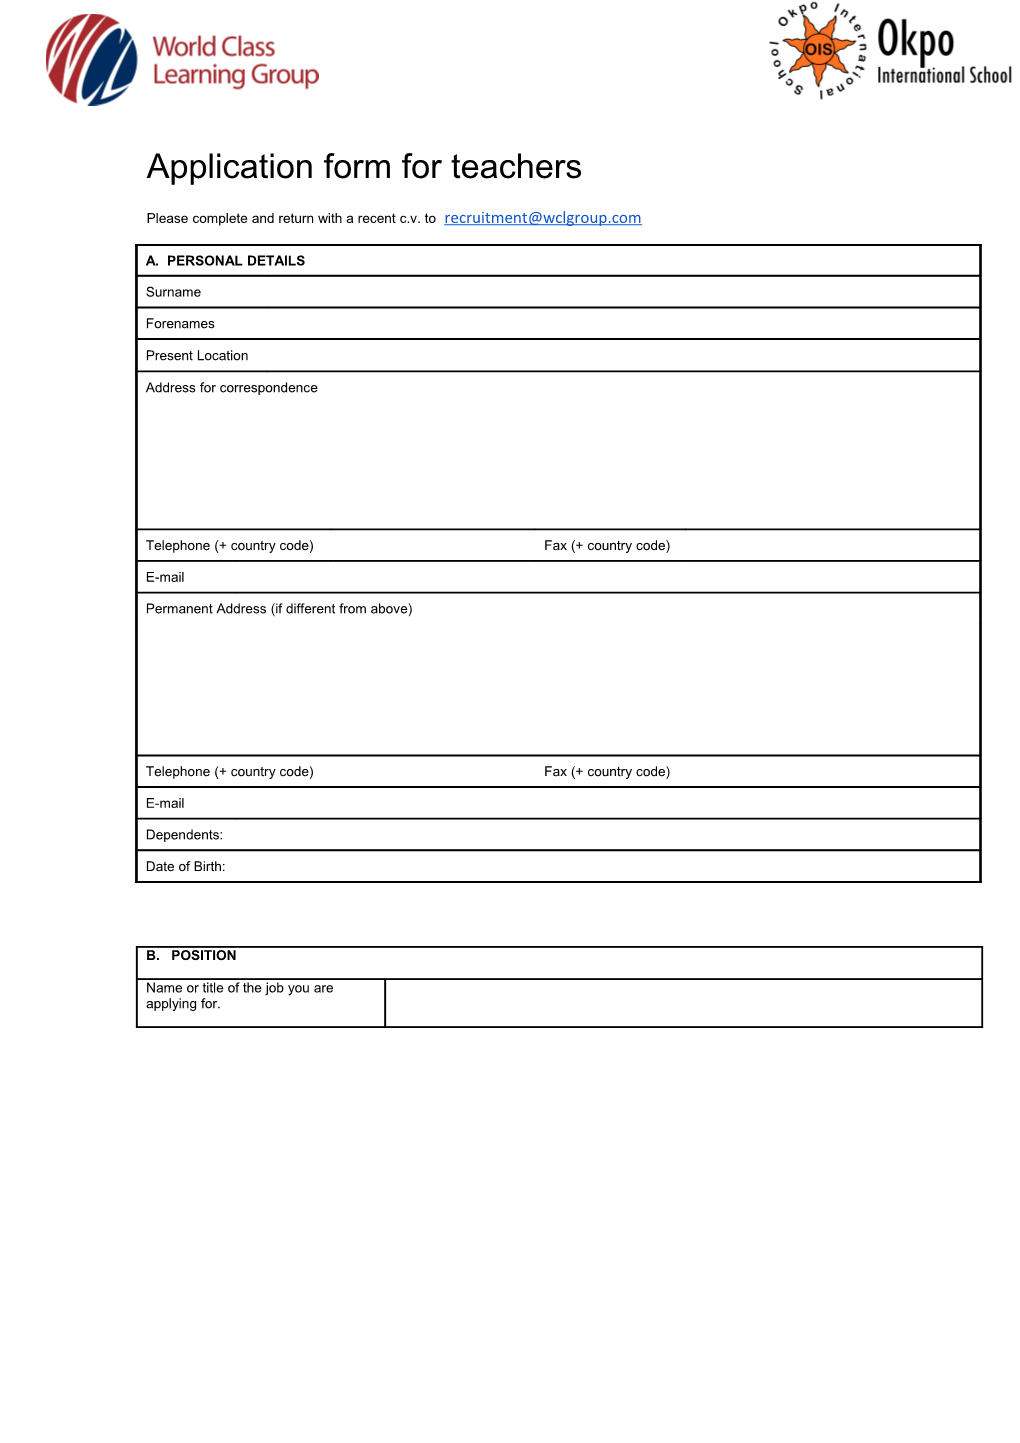 Application Form for Teachers